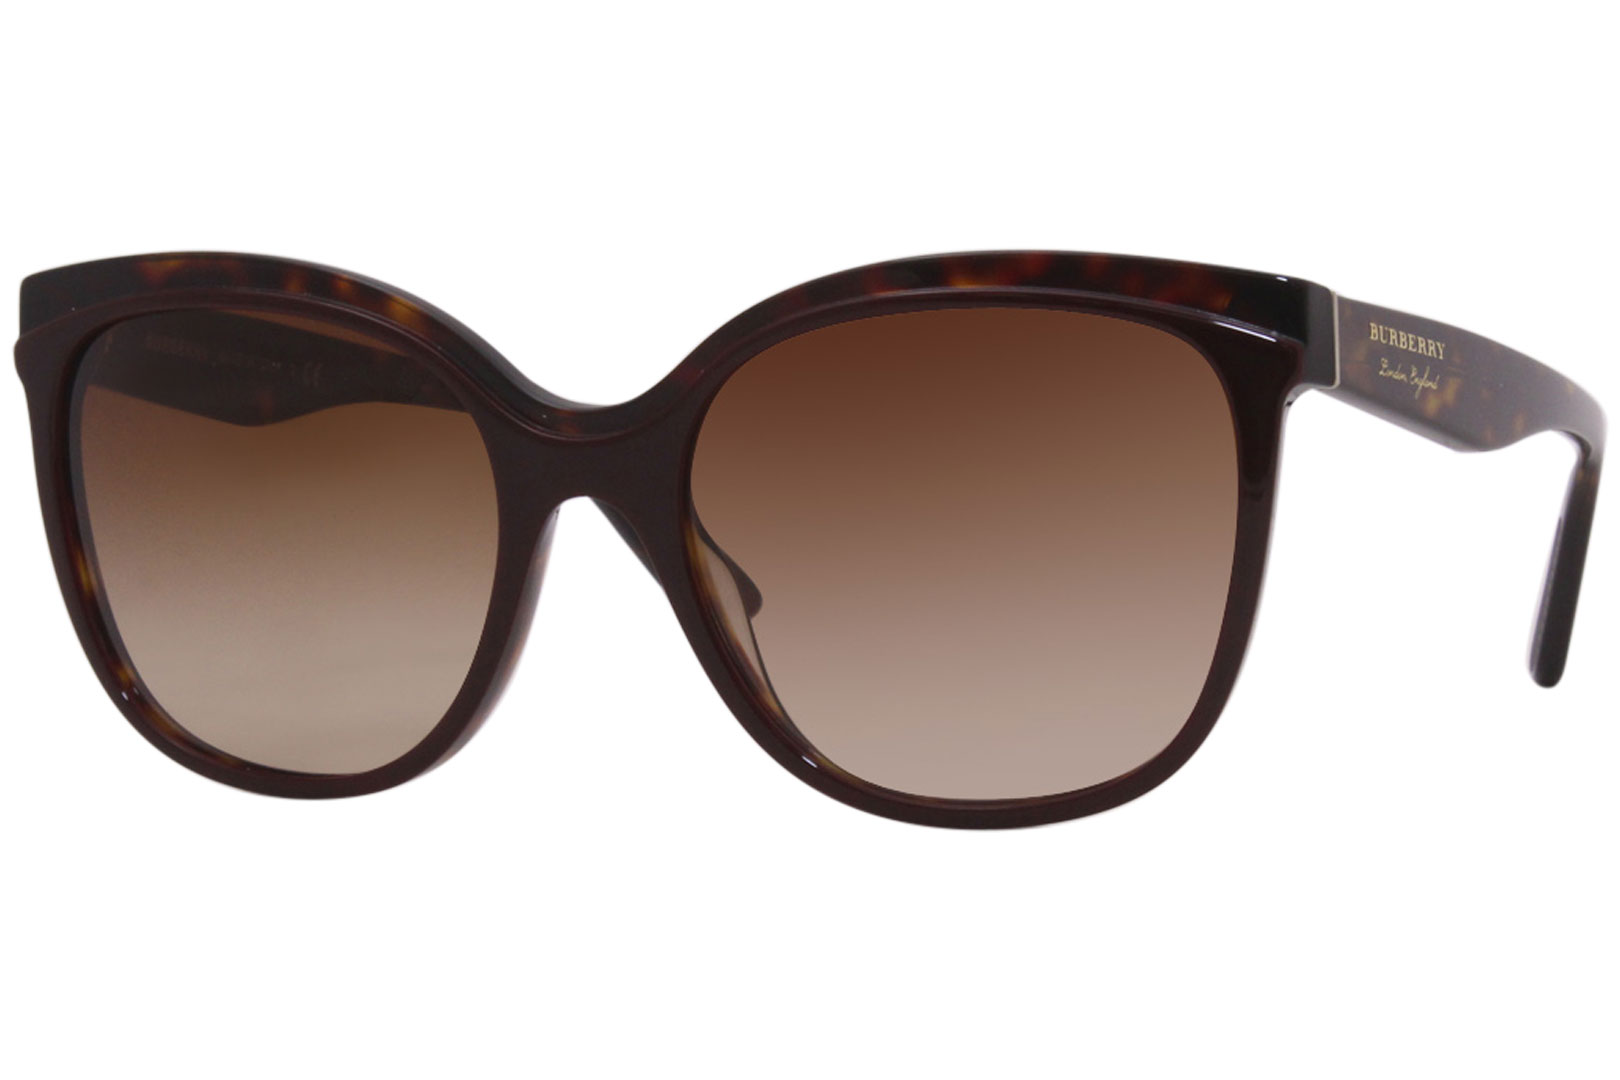 Burberry B-4270 Sunglasses Women's Butterfly Shape